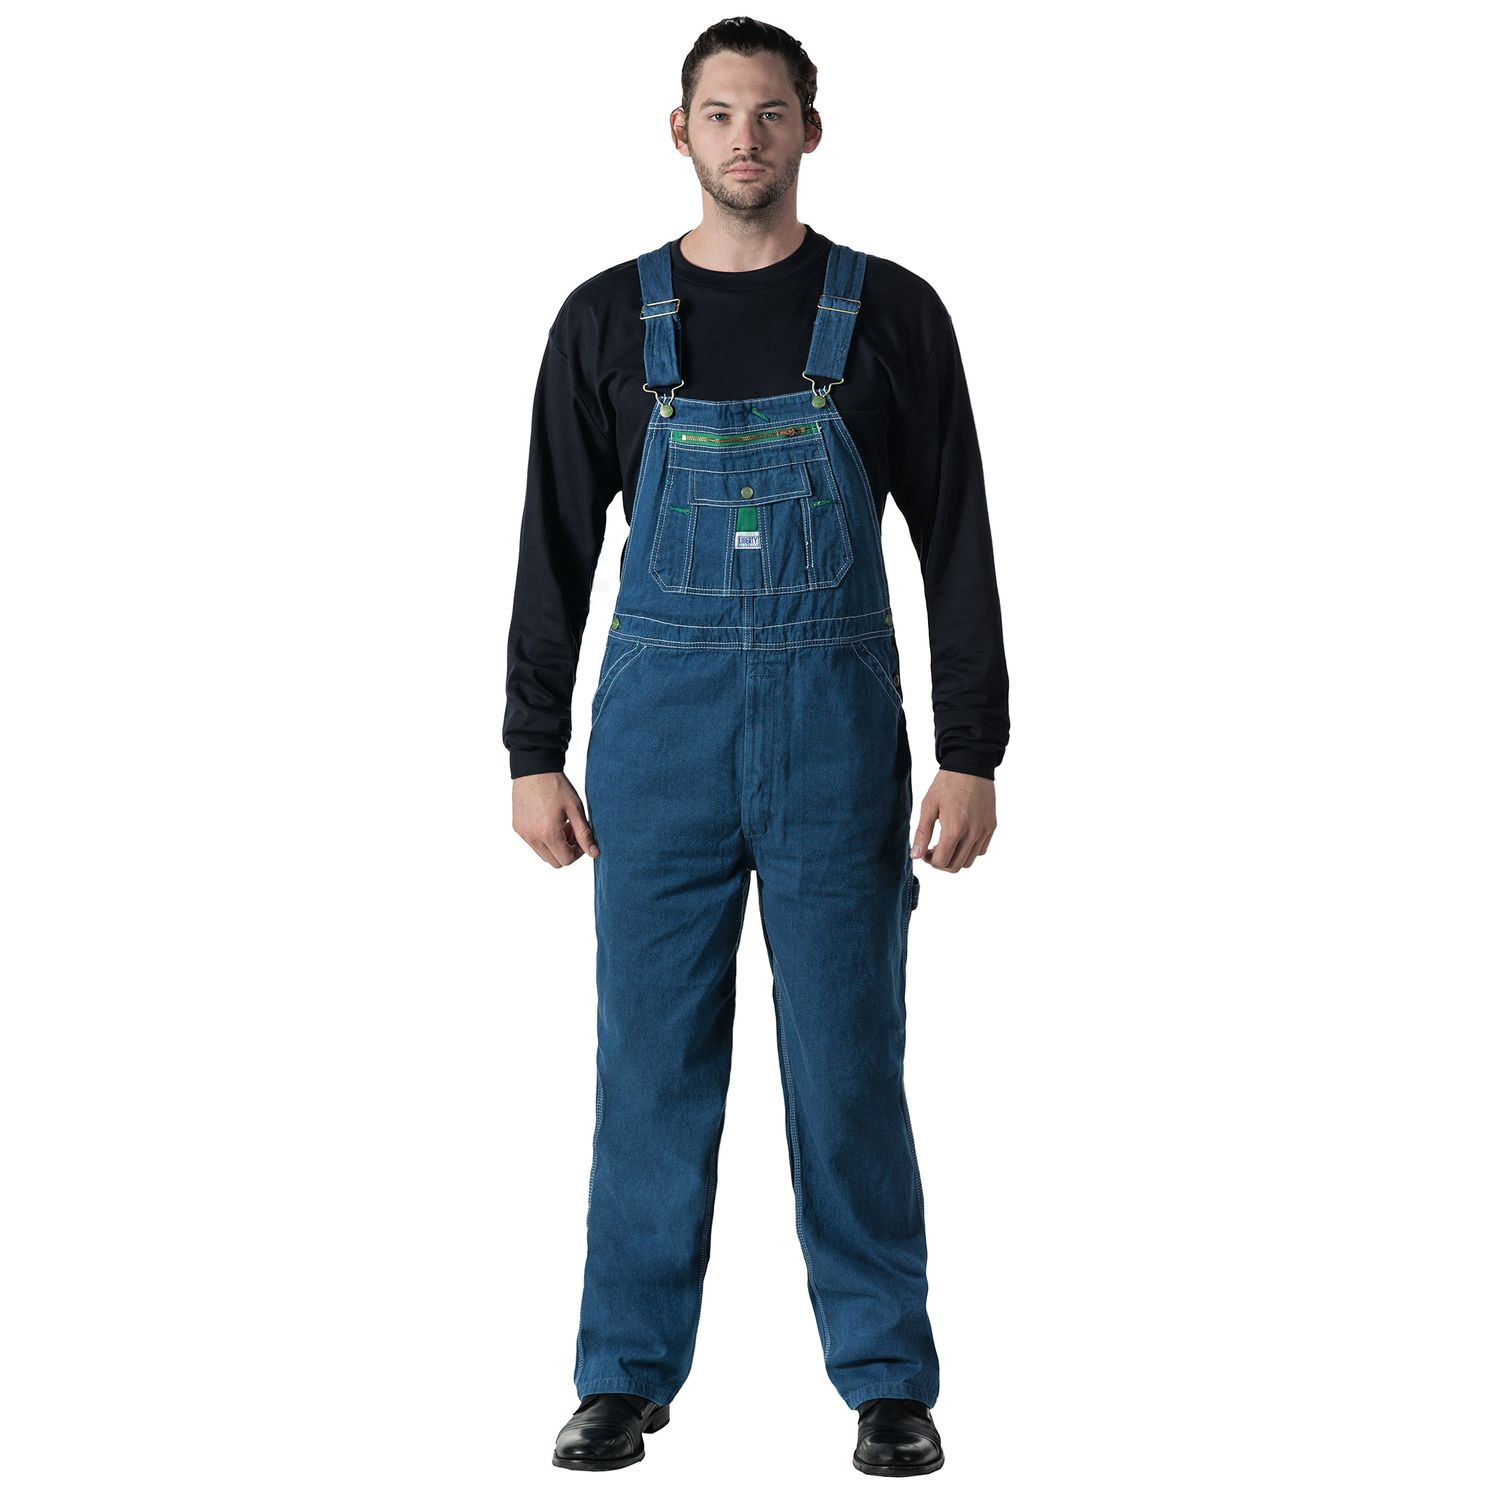 skinny jean overalls for guys